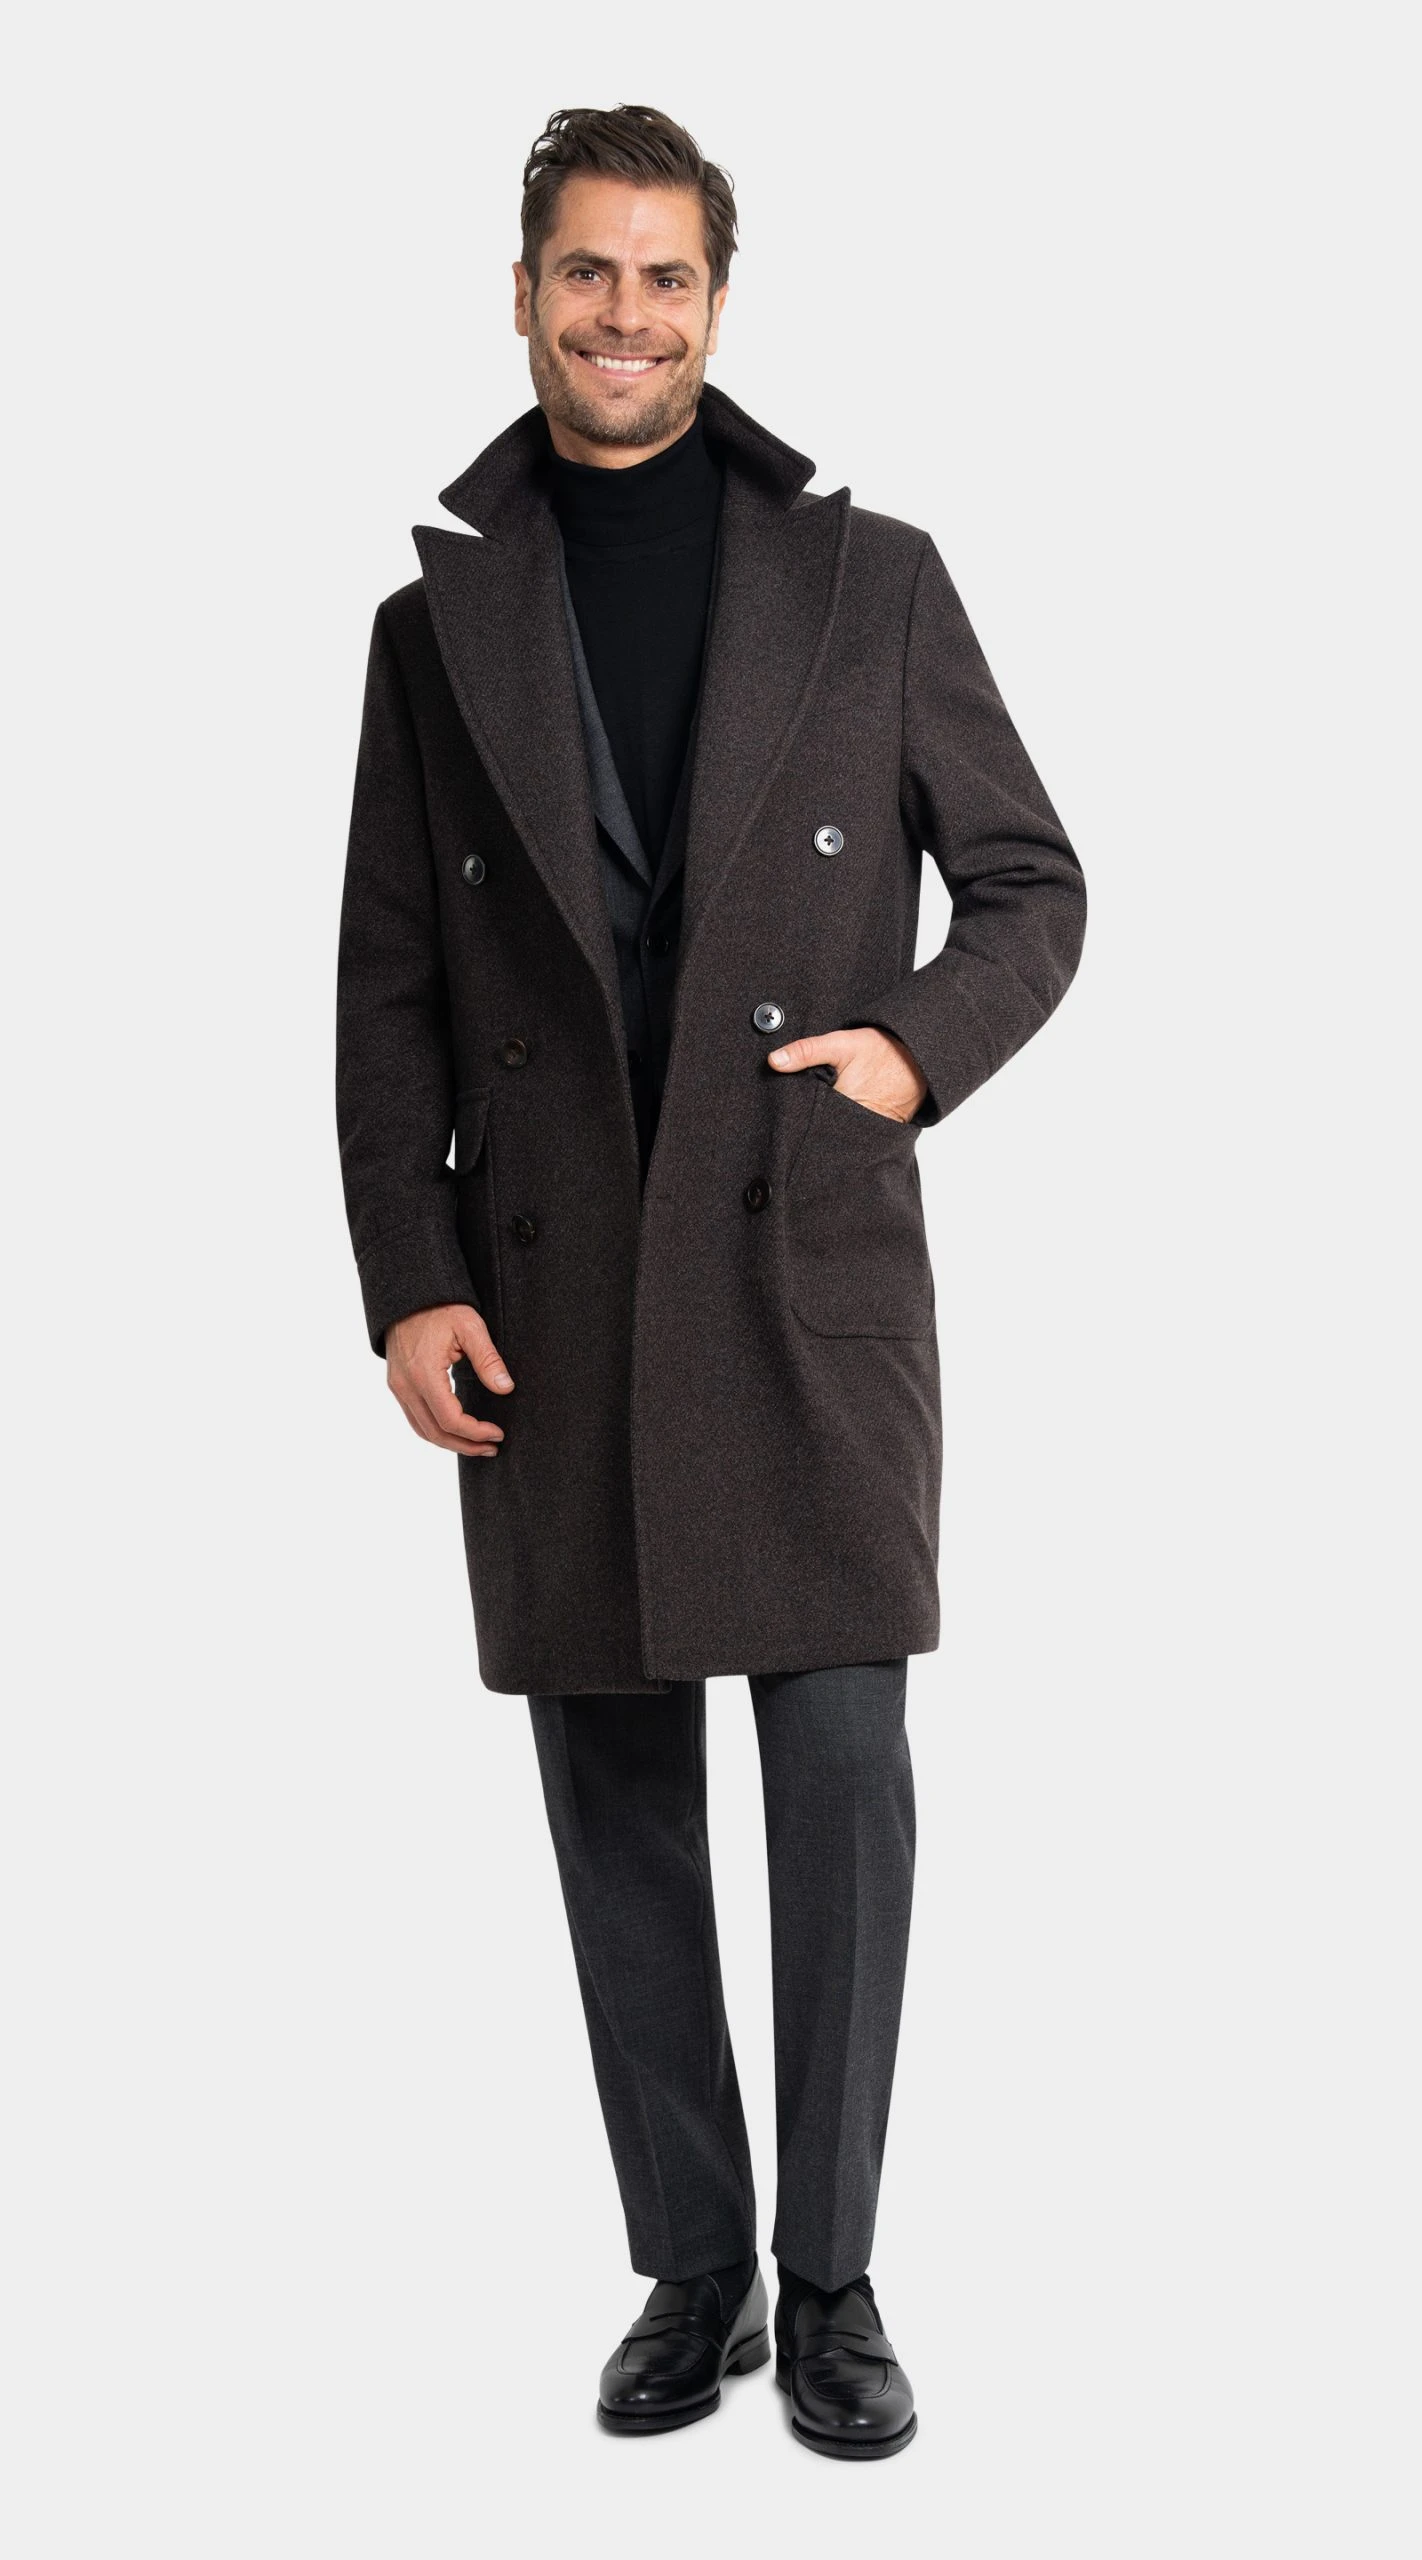 customBrown Wool and Cashmere Overcoat by mond of copenhagen